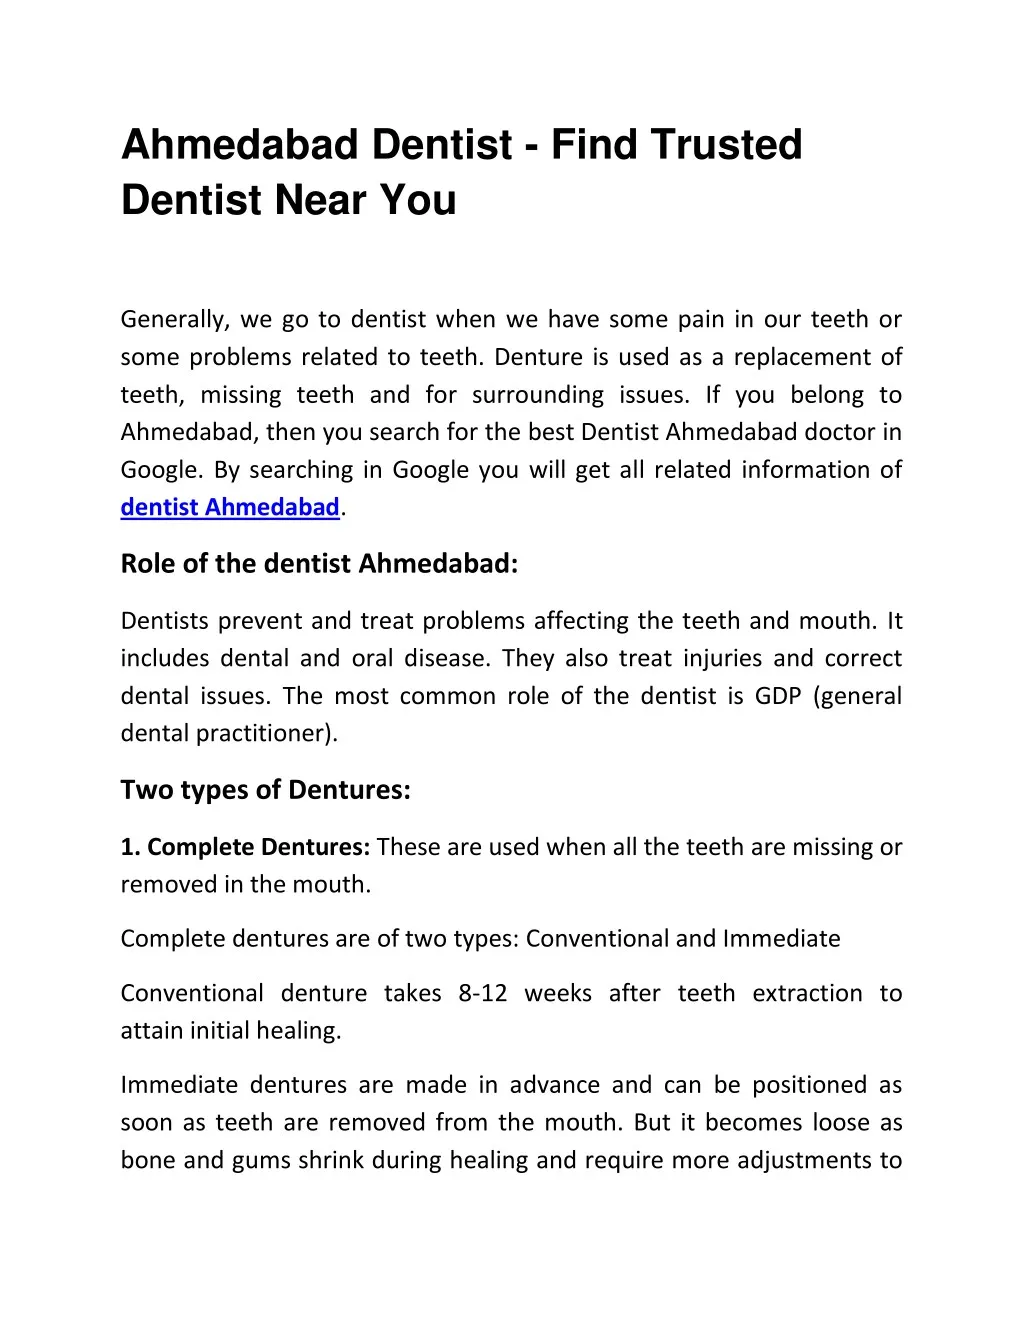 ahmedabad dentist find trusted dentist near you